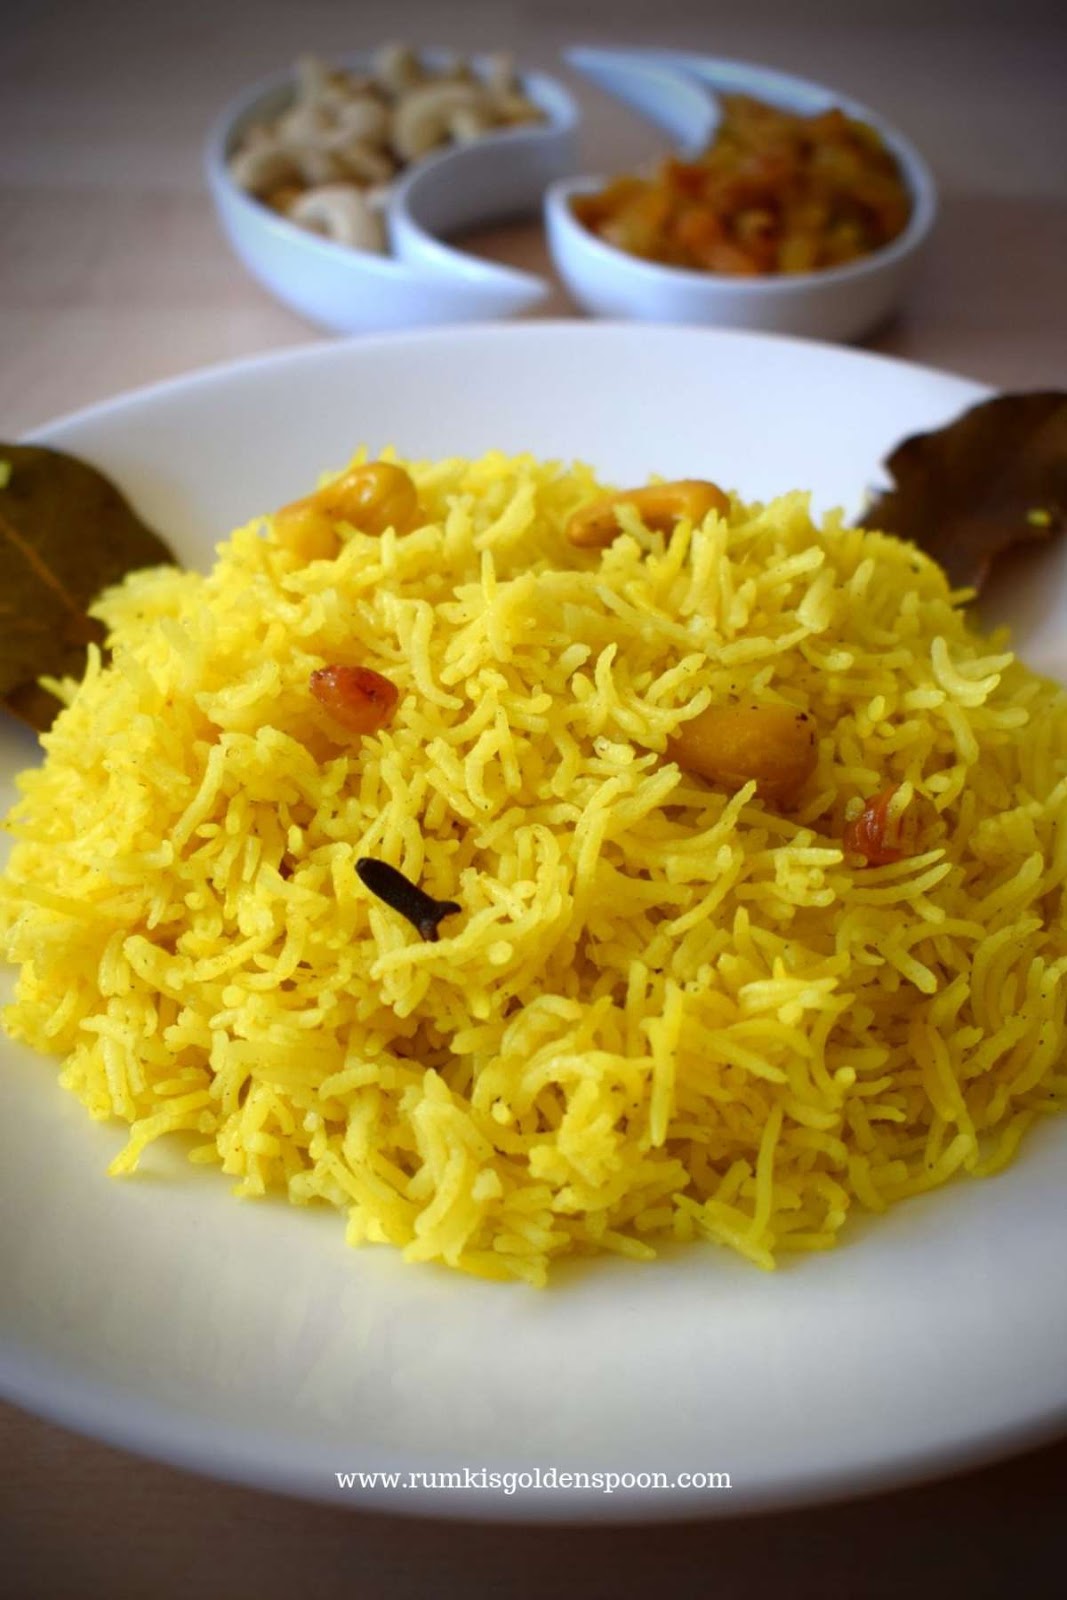 mishti pulao, yellow pulao, Sweet pulao, pilau rice recipe, pulao rice recipe, how to make basanti pulao, sweet yellow rice, Bengali holud pulao, traditional pilau recipe, Indian pilau rice recipe, Rumki's Golden Spoon